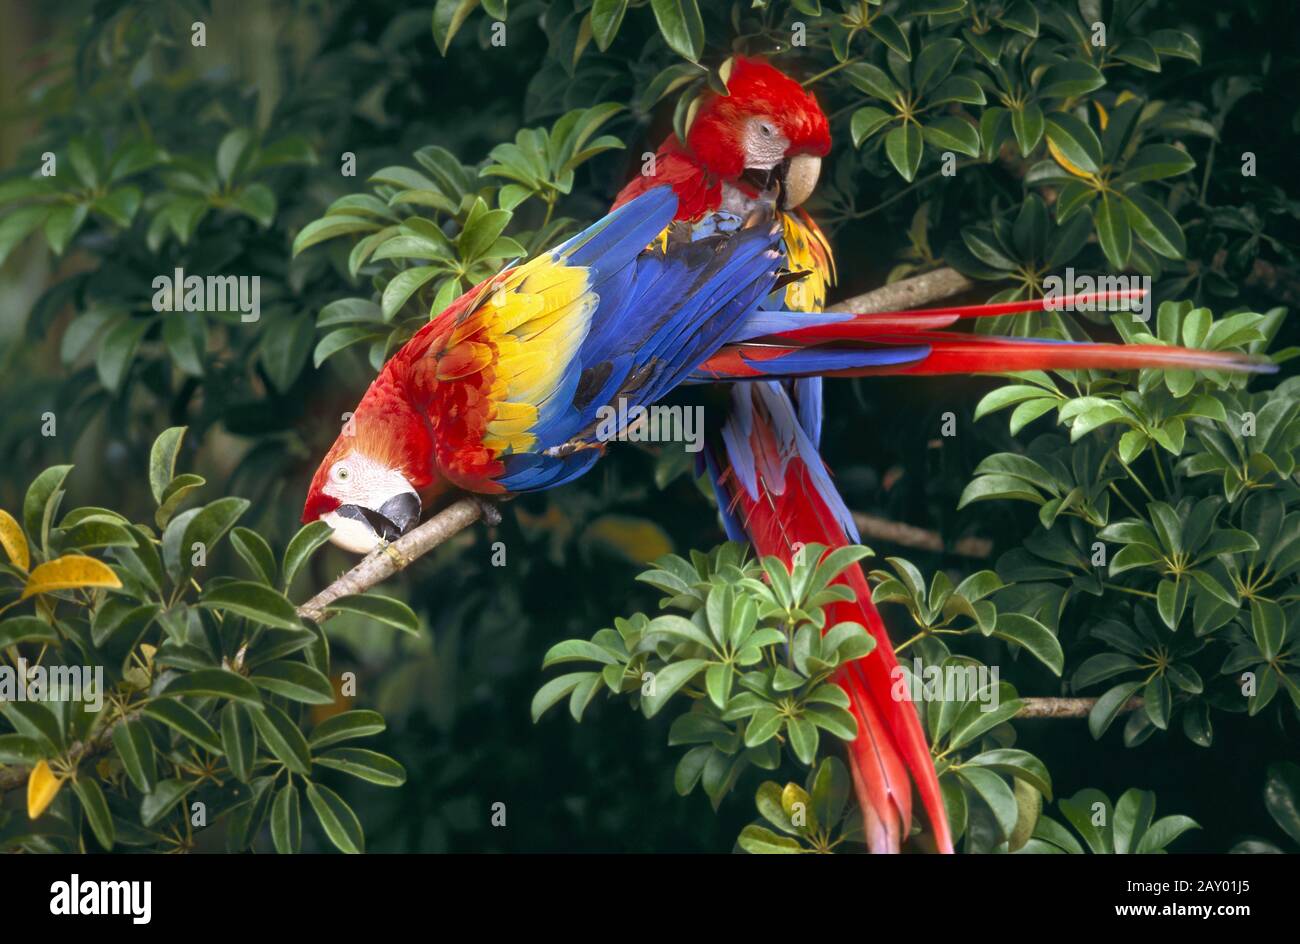 Hellroter Ara, arakanga, red macaw, scarlet Stock Photo - Alamy